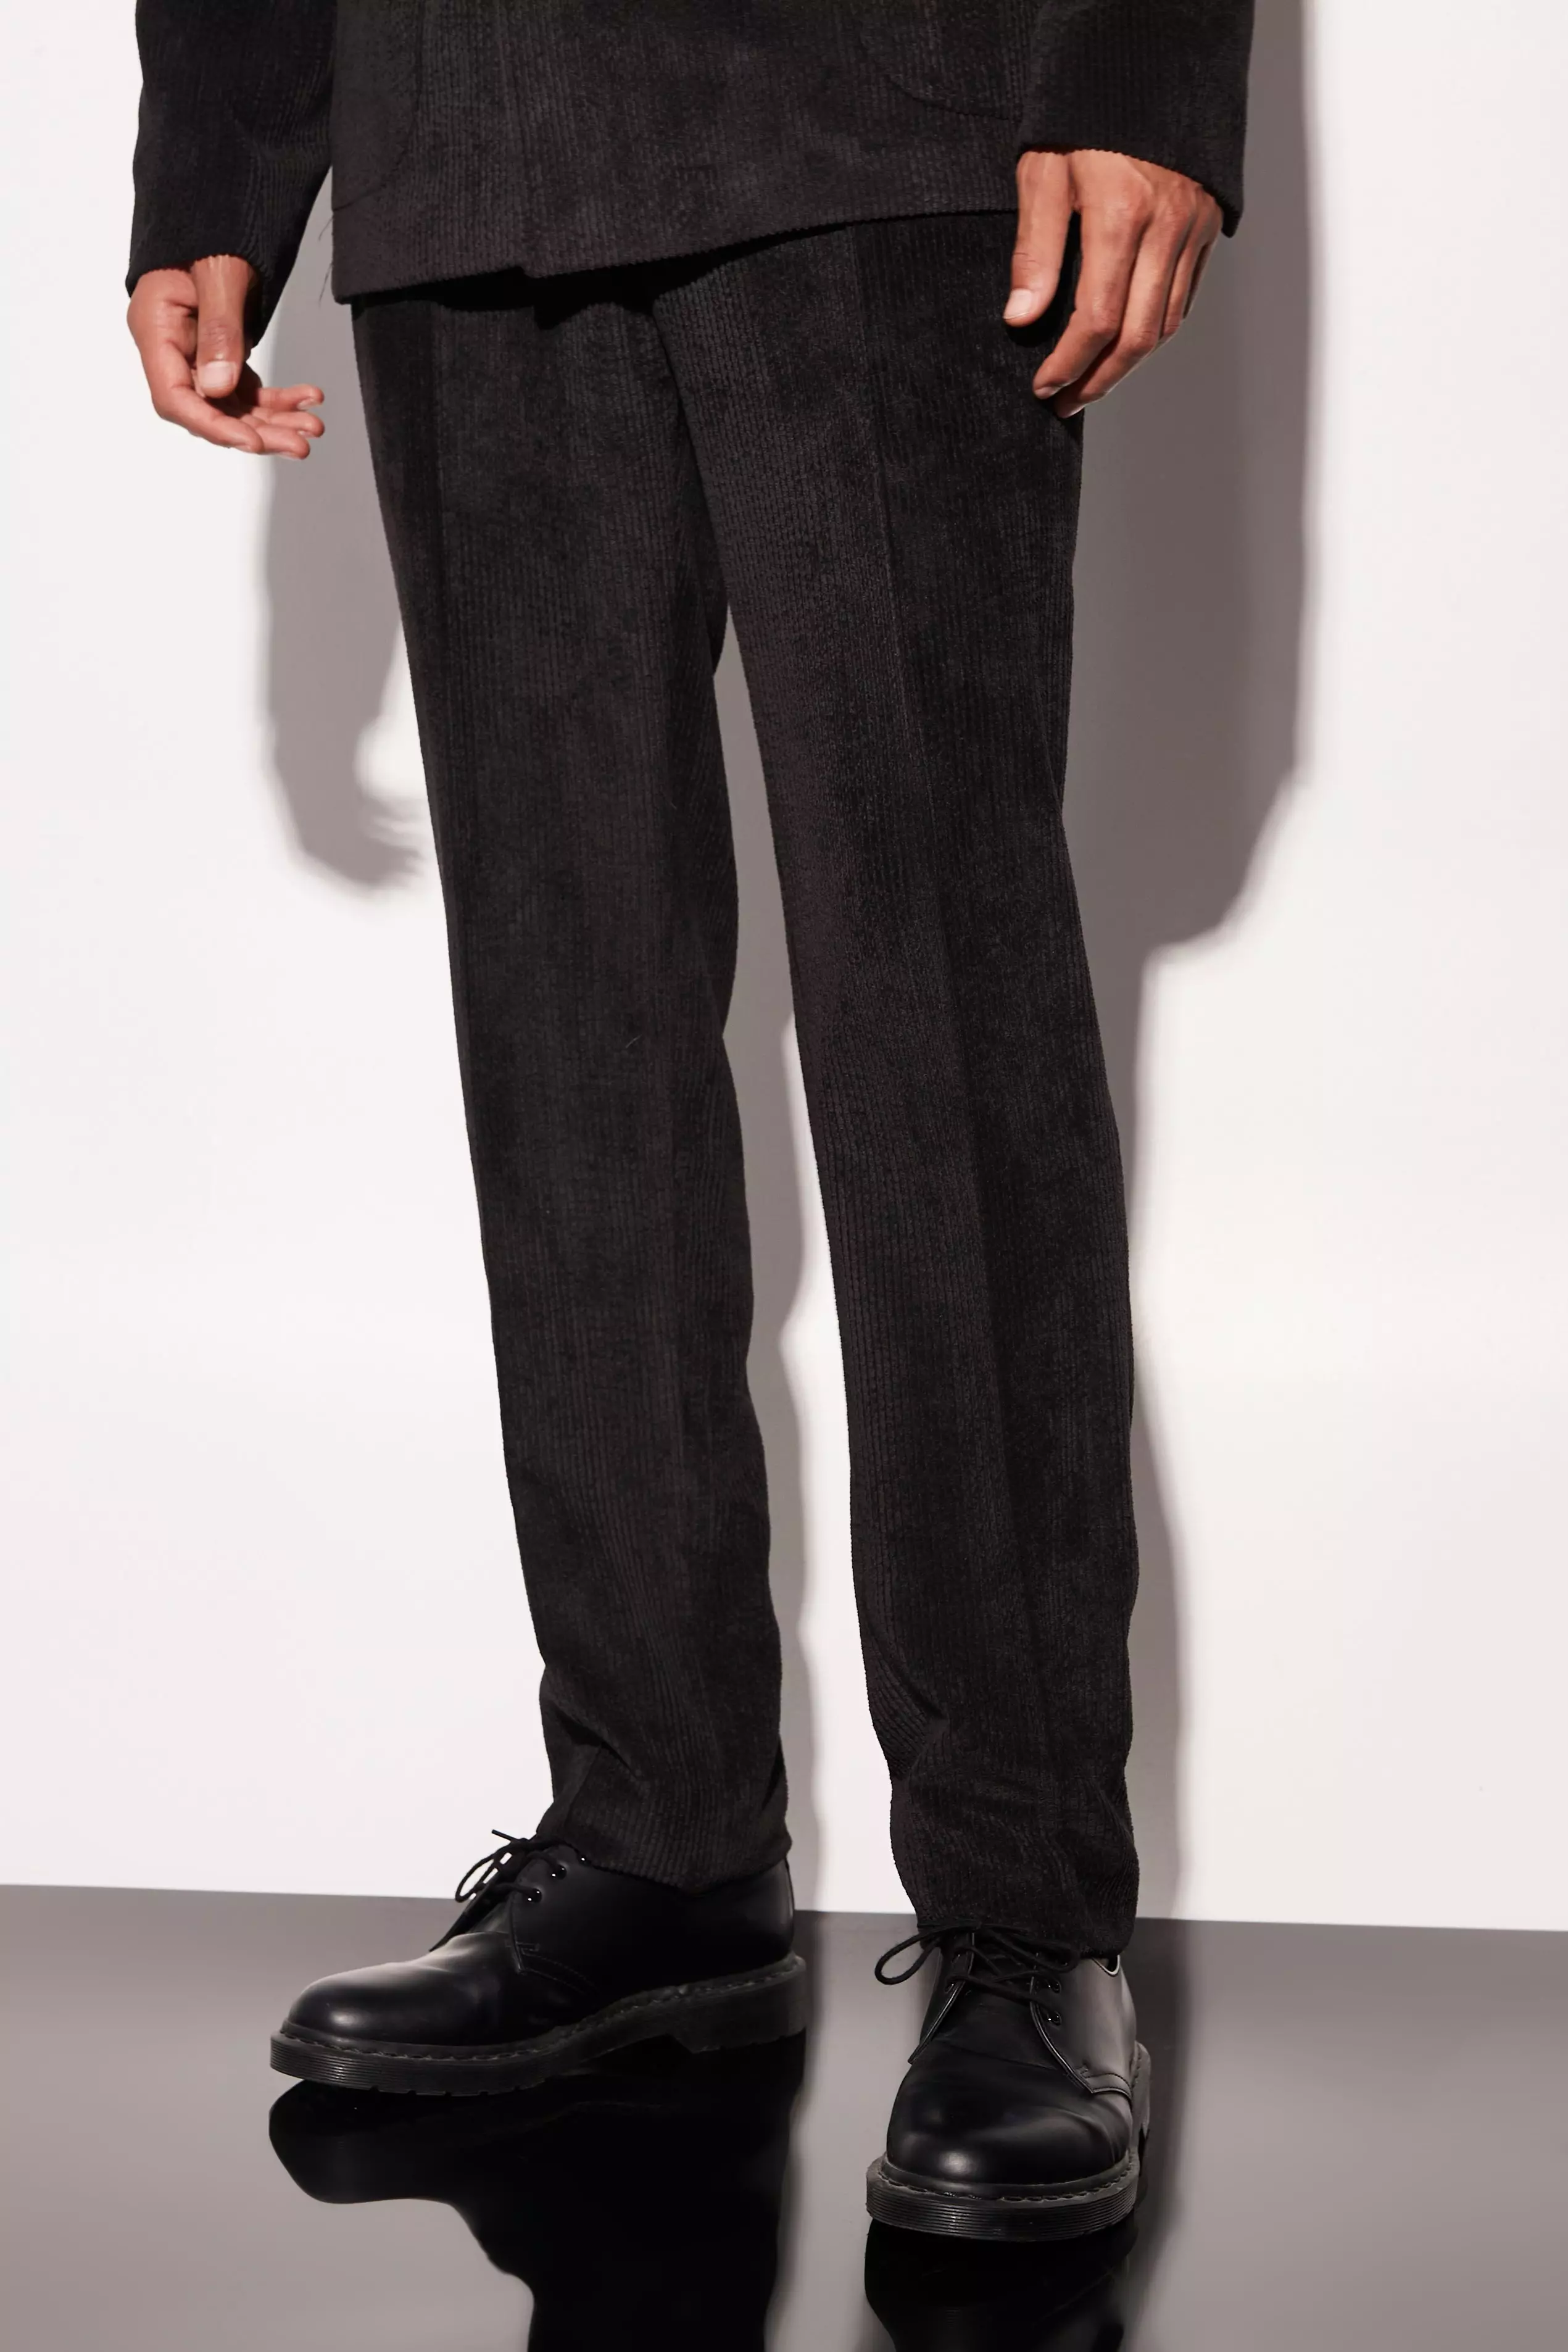 Black Tall Slim Cord Suit Pants